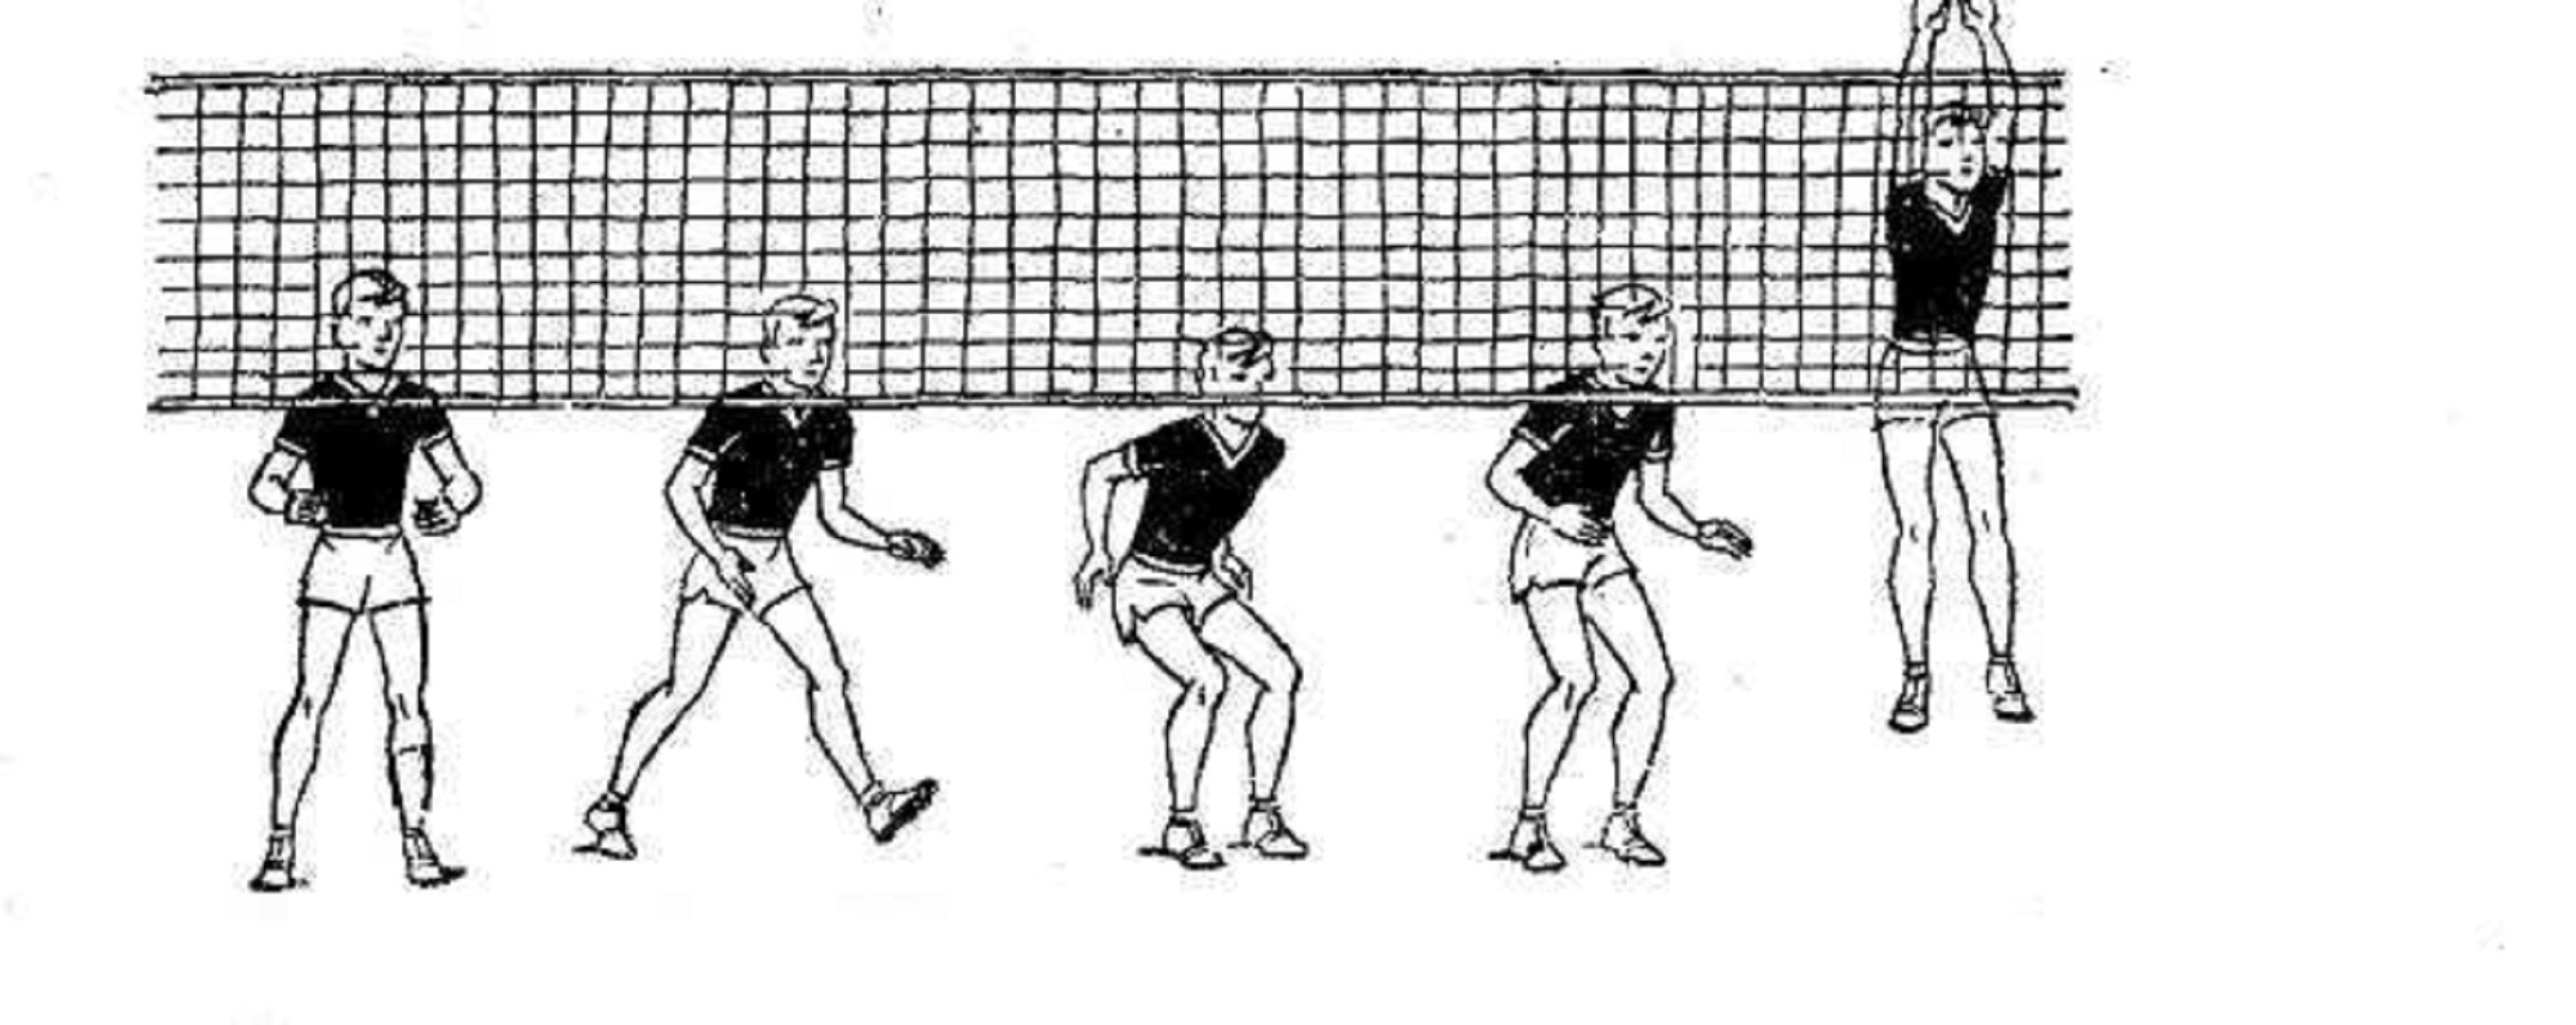 Техника блокирования мяча в волейболе